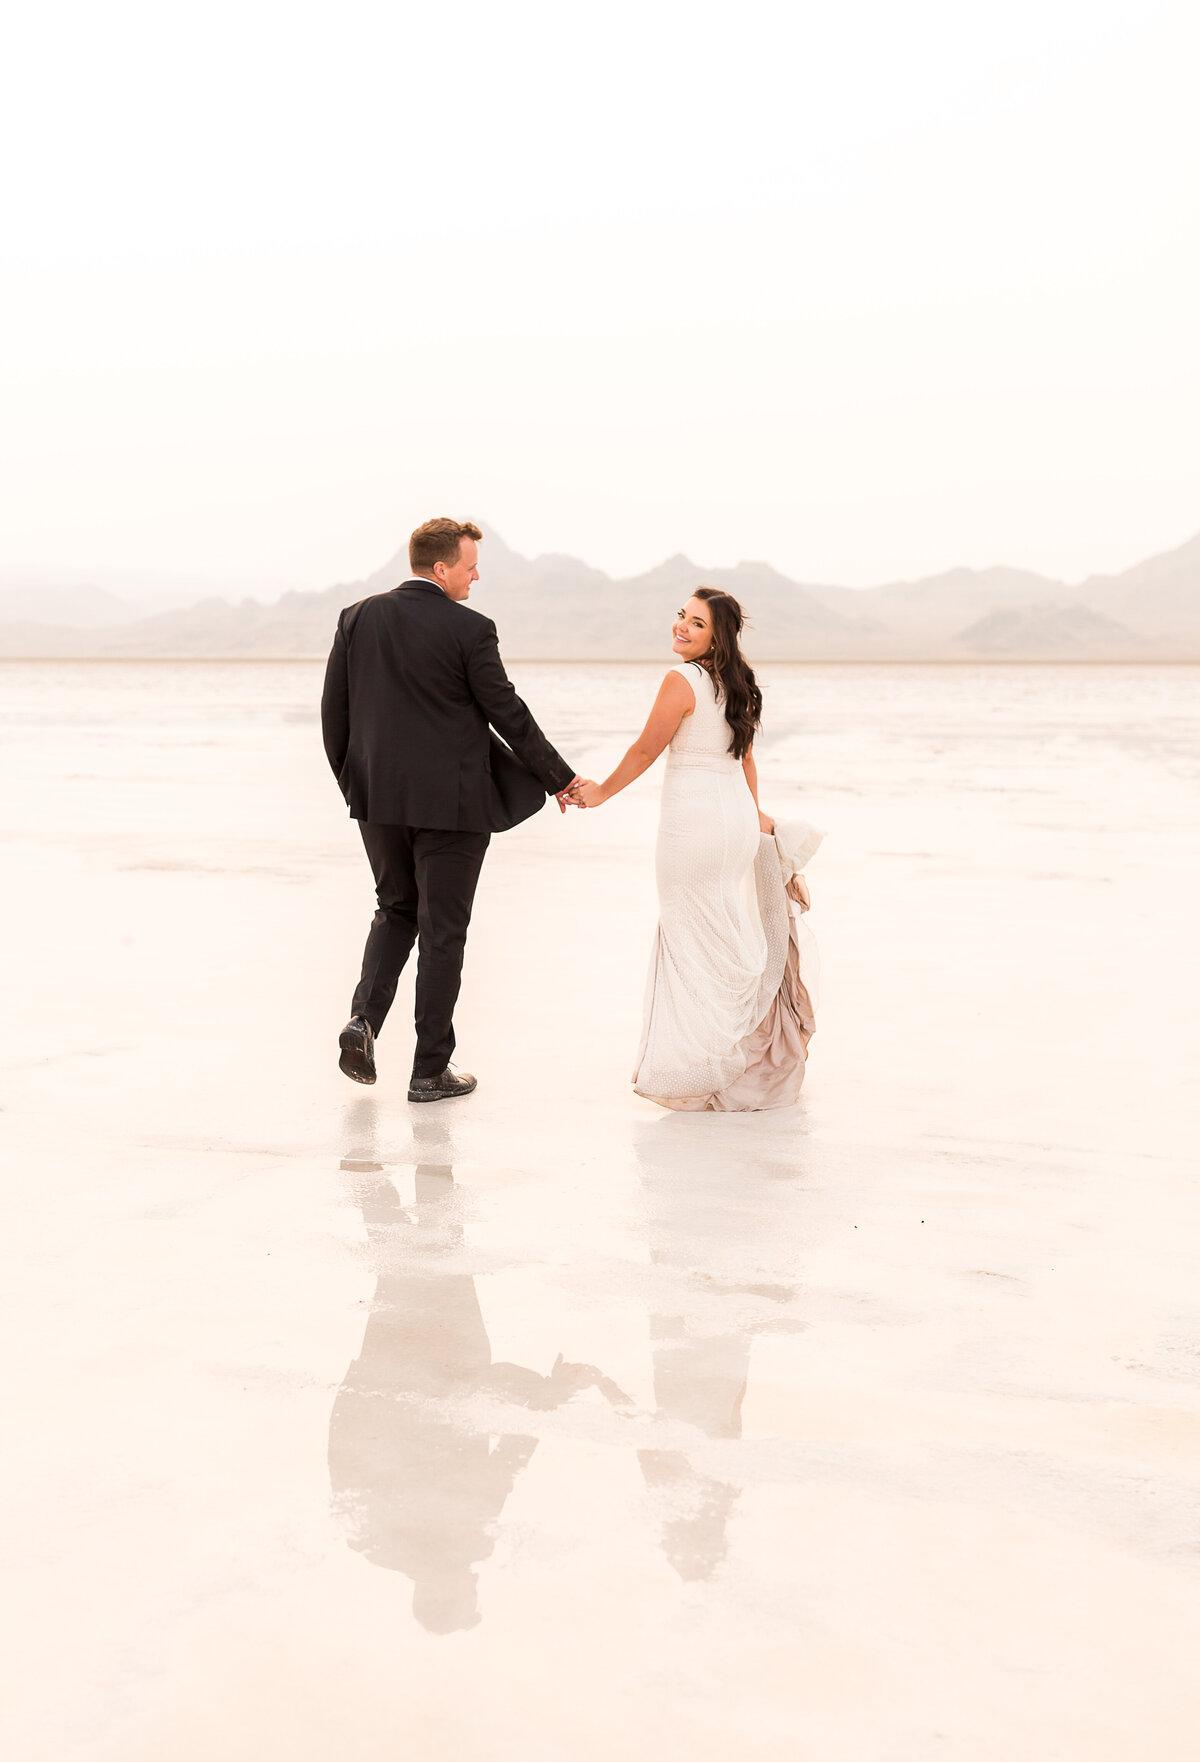 Bridal Photos taken at the Salt Flats in Utah by Robin Kunzler Photo